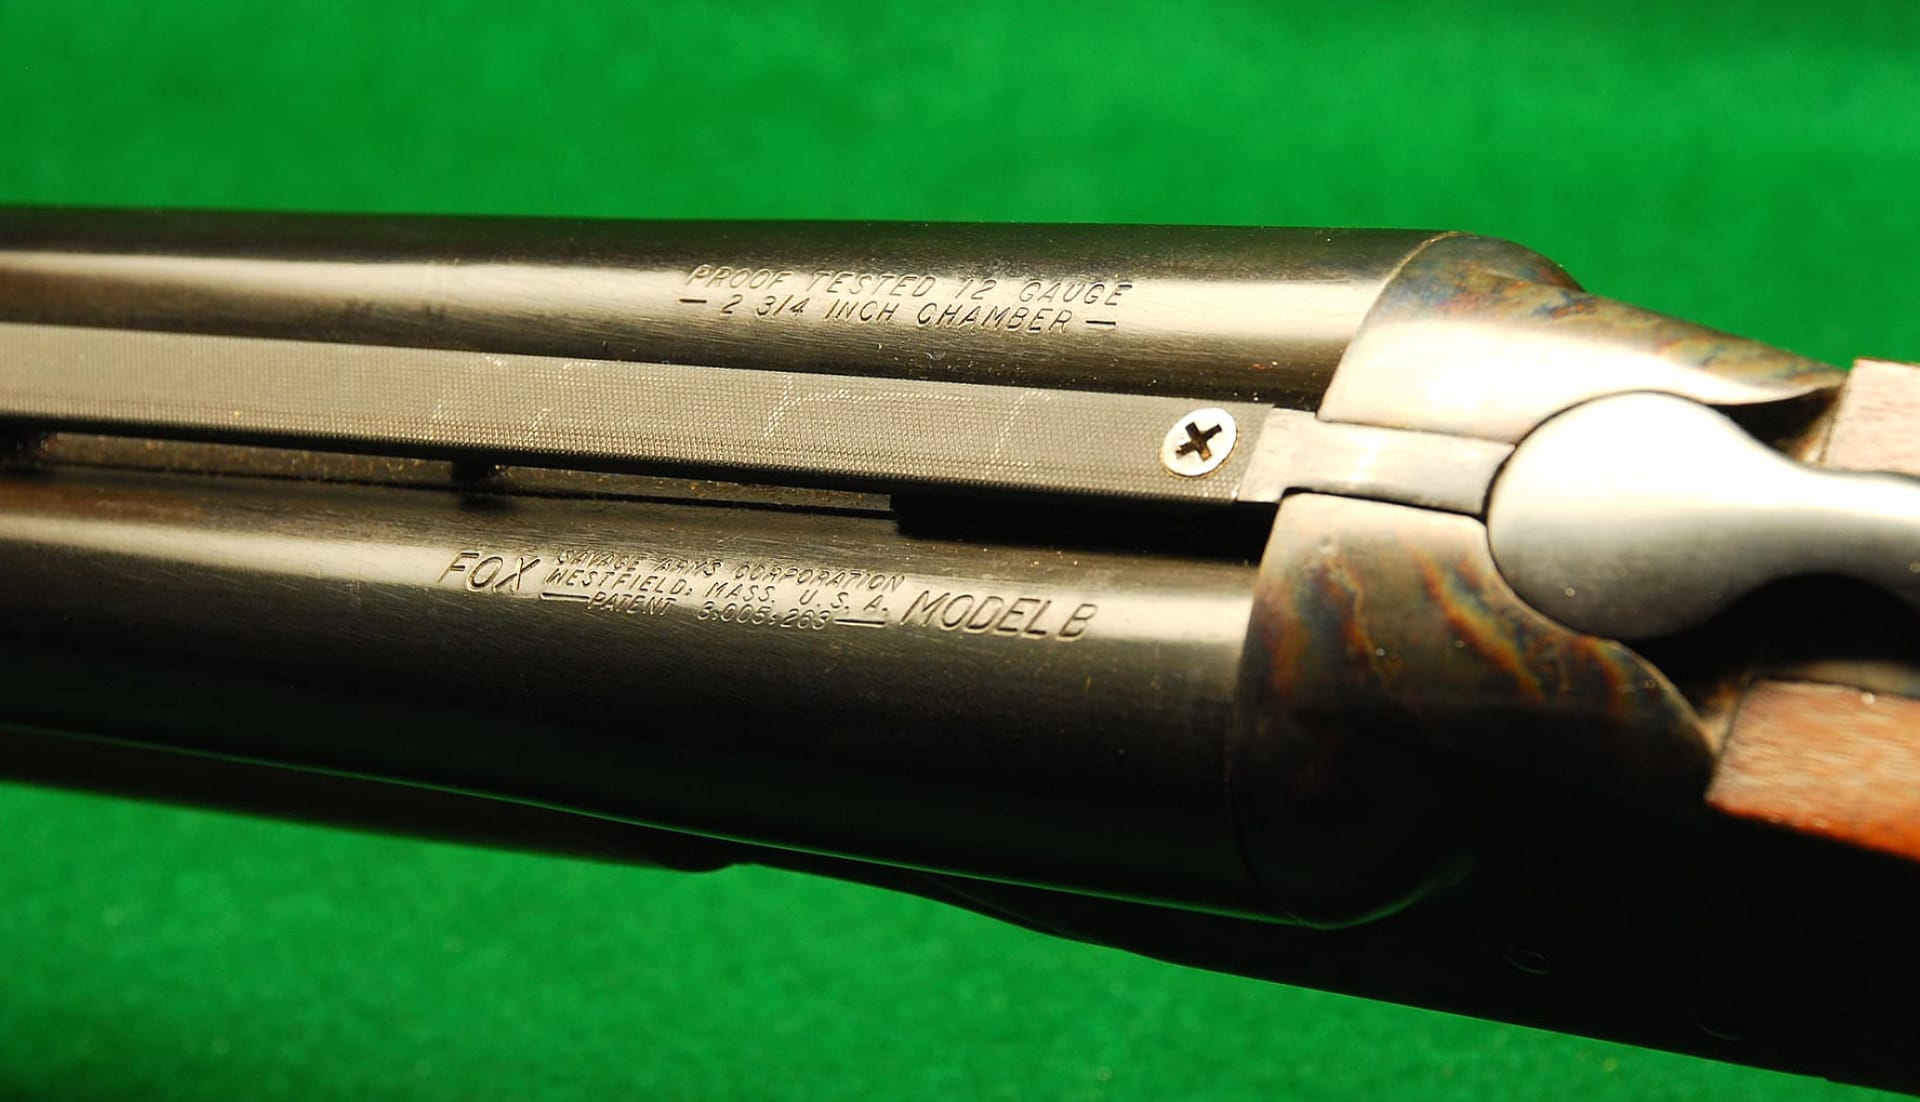 Savage Fox Model B shotgun at 1280 x 960 size wallpapers HD quality